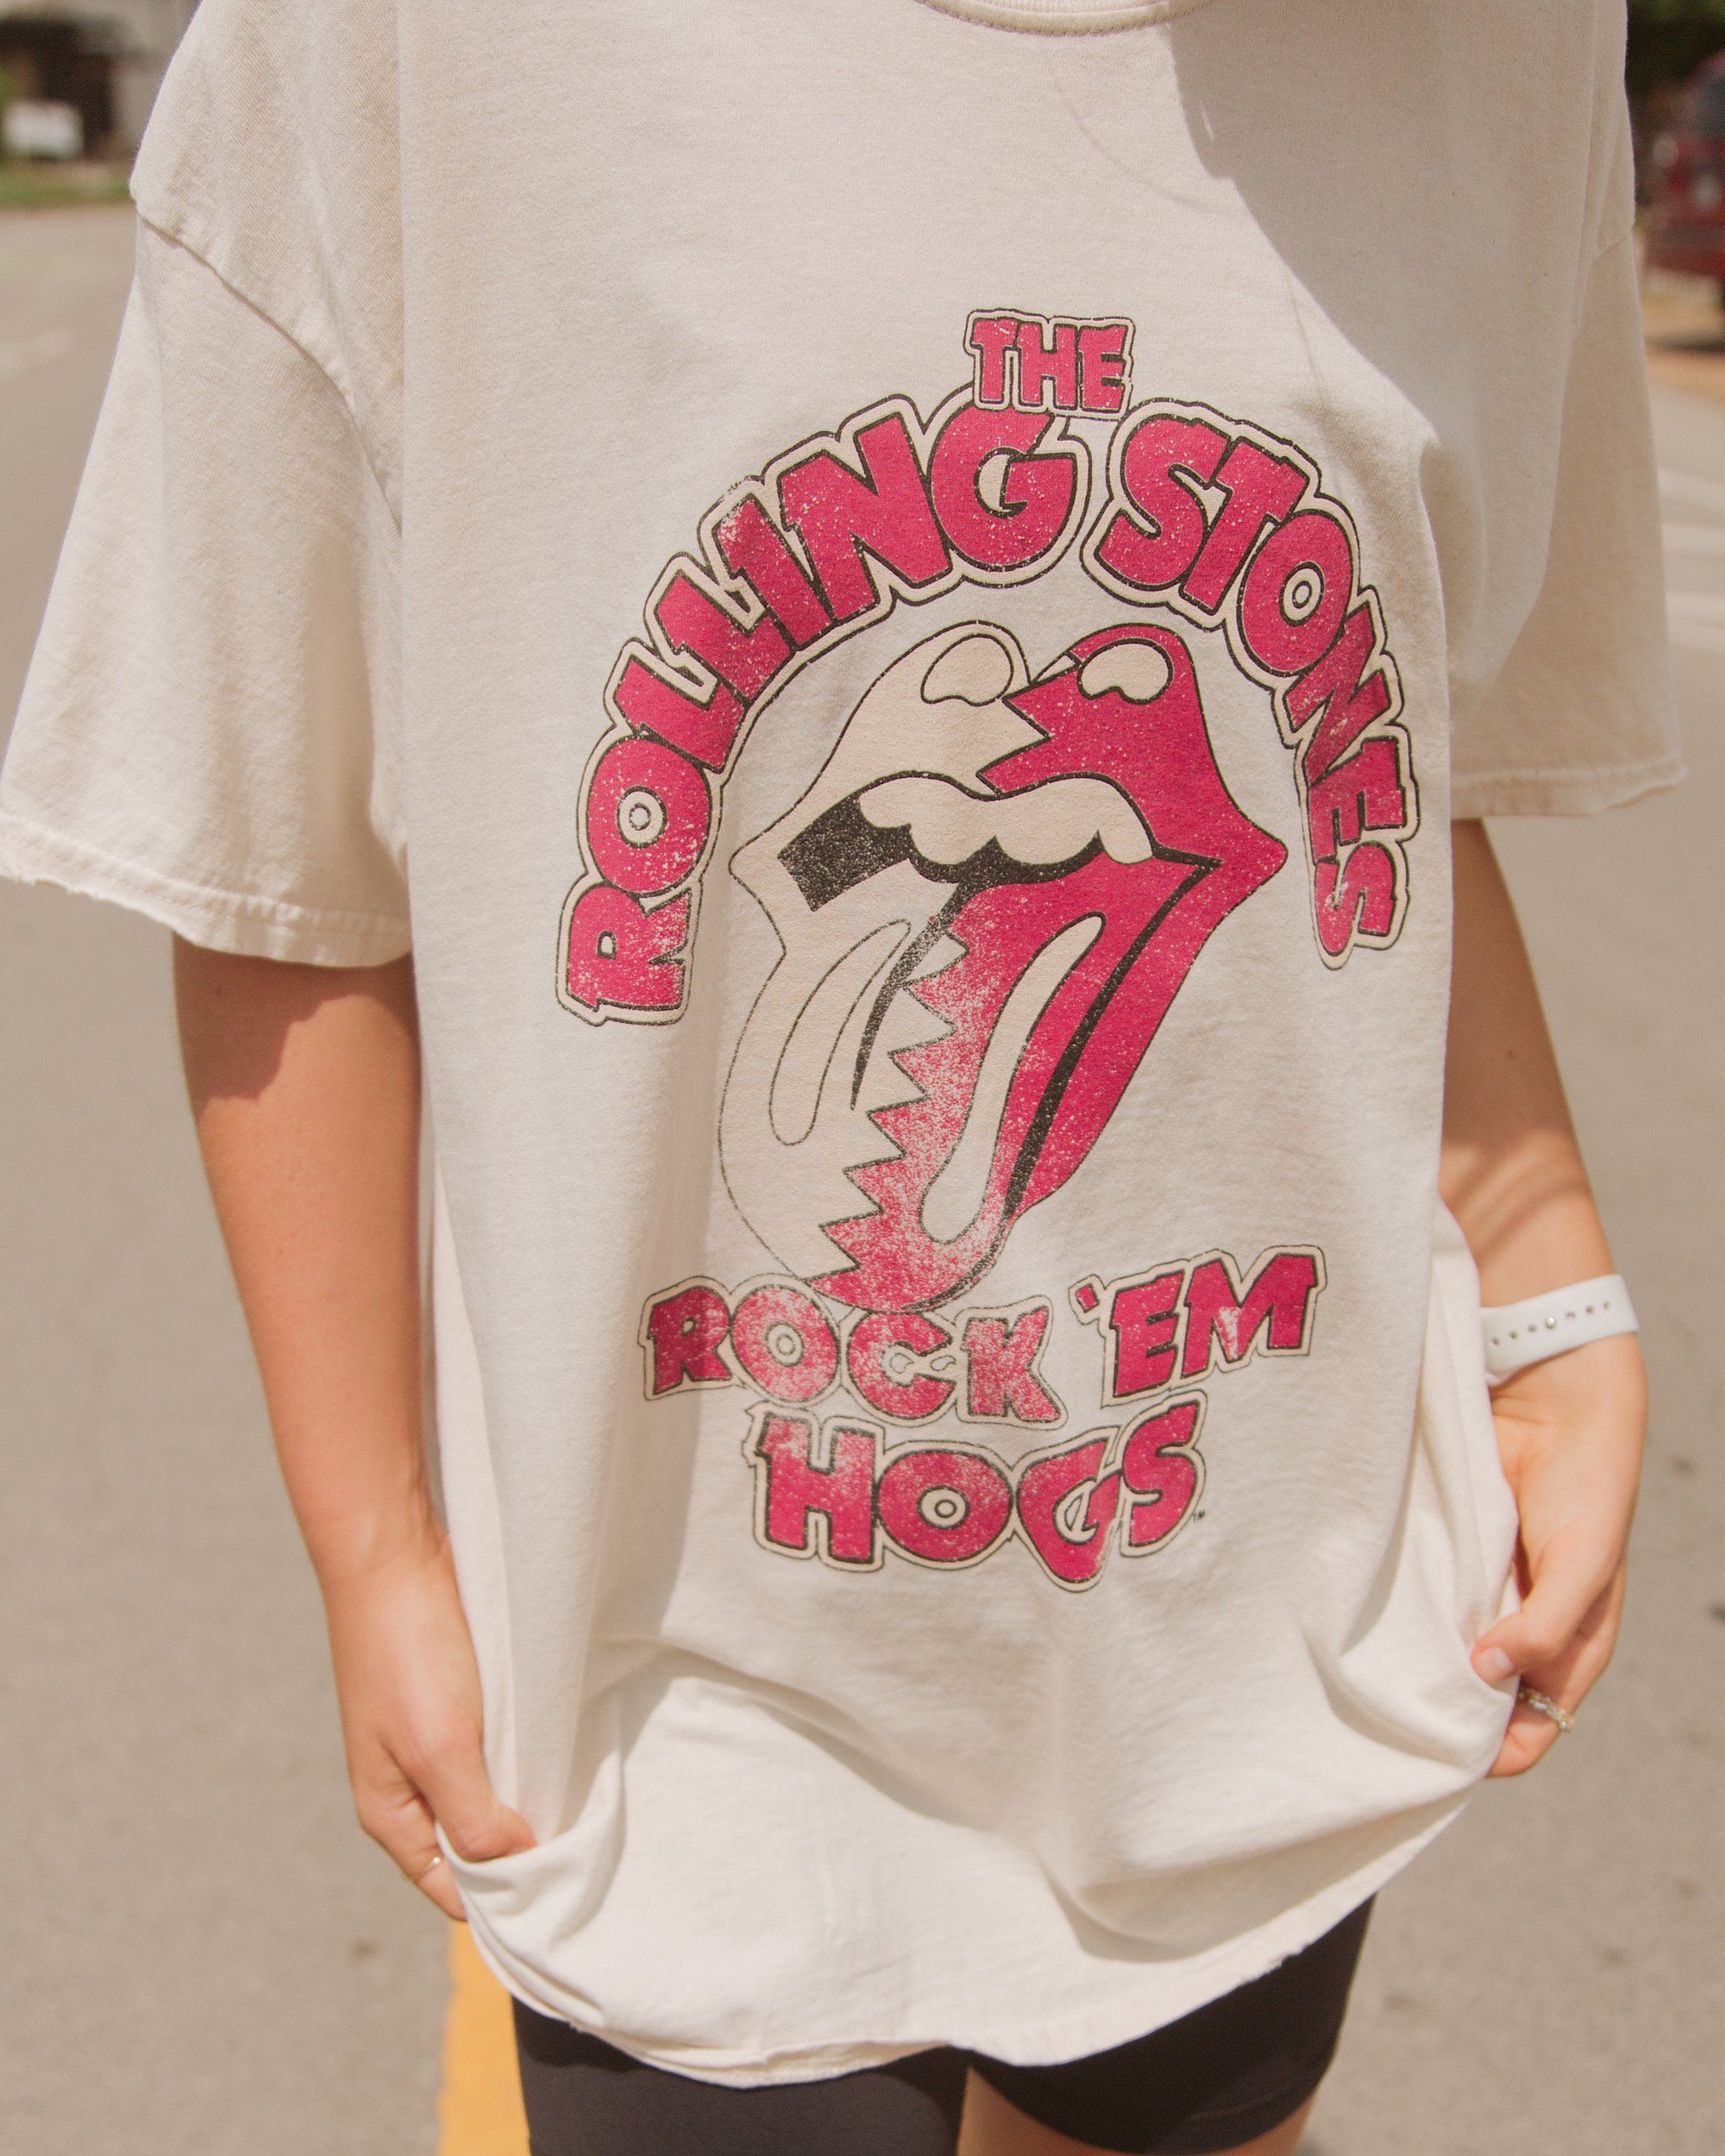 Rolling Stones Rock 'Em Hogs Off White Thrifted Tee - shoplivylu